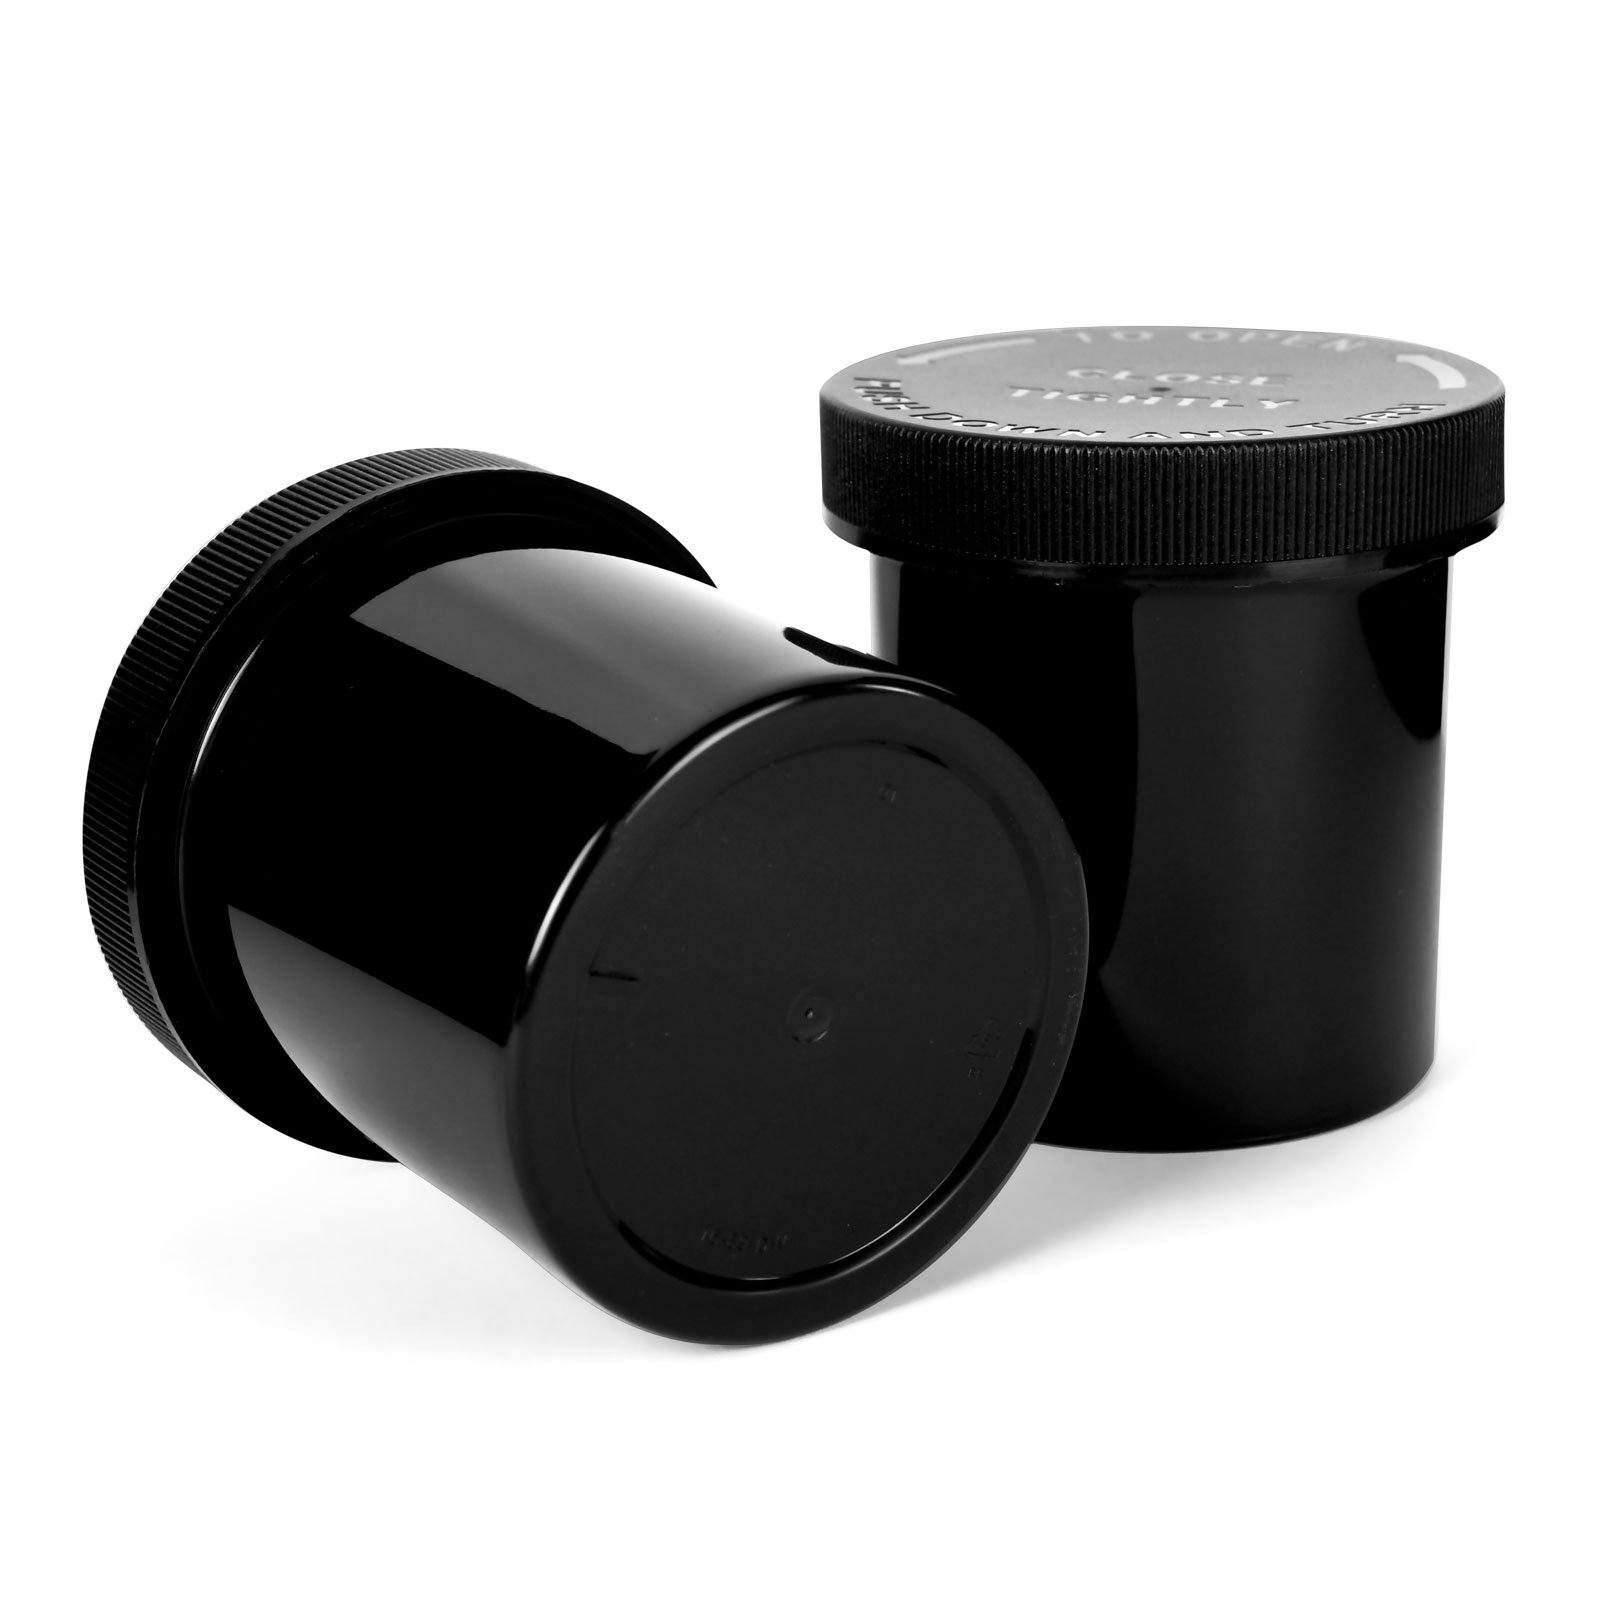 16oz Child Resistant Plastic Jar Black  48 COUNT at Flower Power Packages